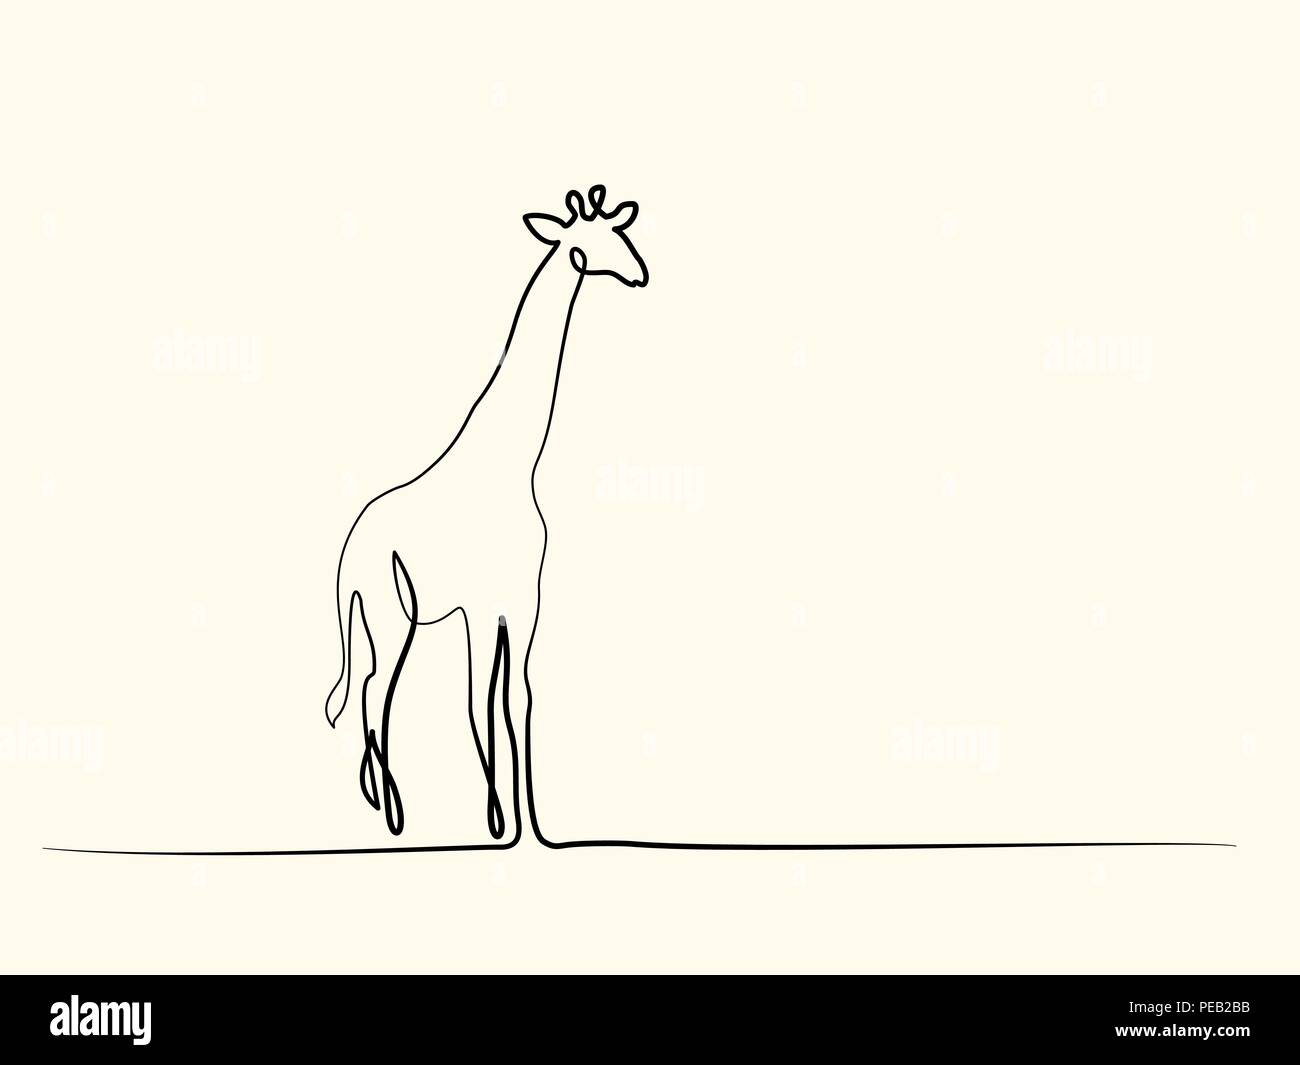 Dessin d'une ligne continue. Symbole marche girafe. Logo de la girafe. Vector illustration Illustration de Vecteur